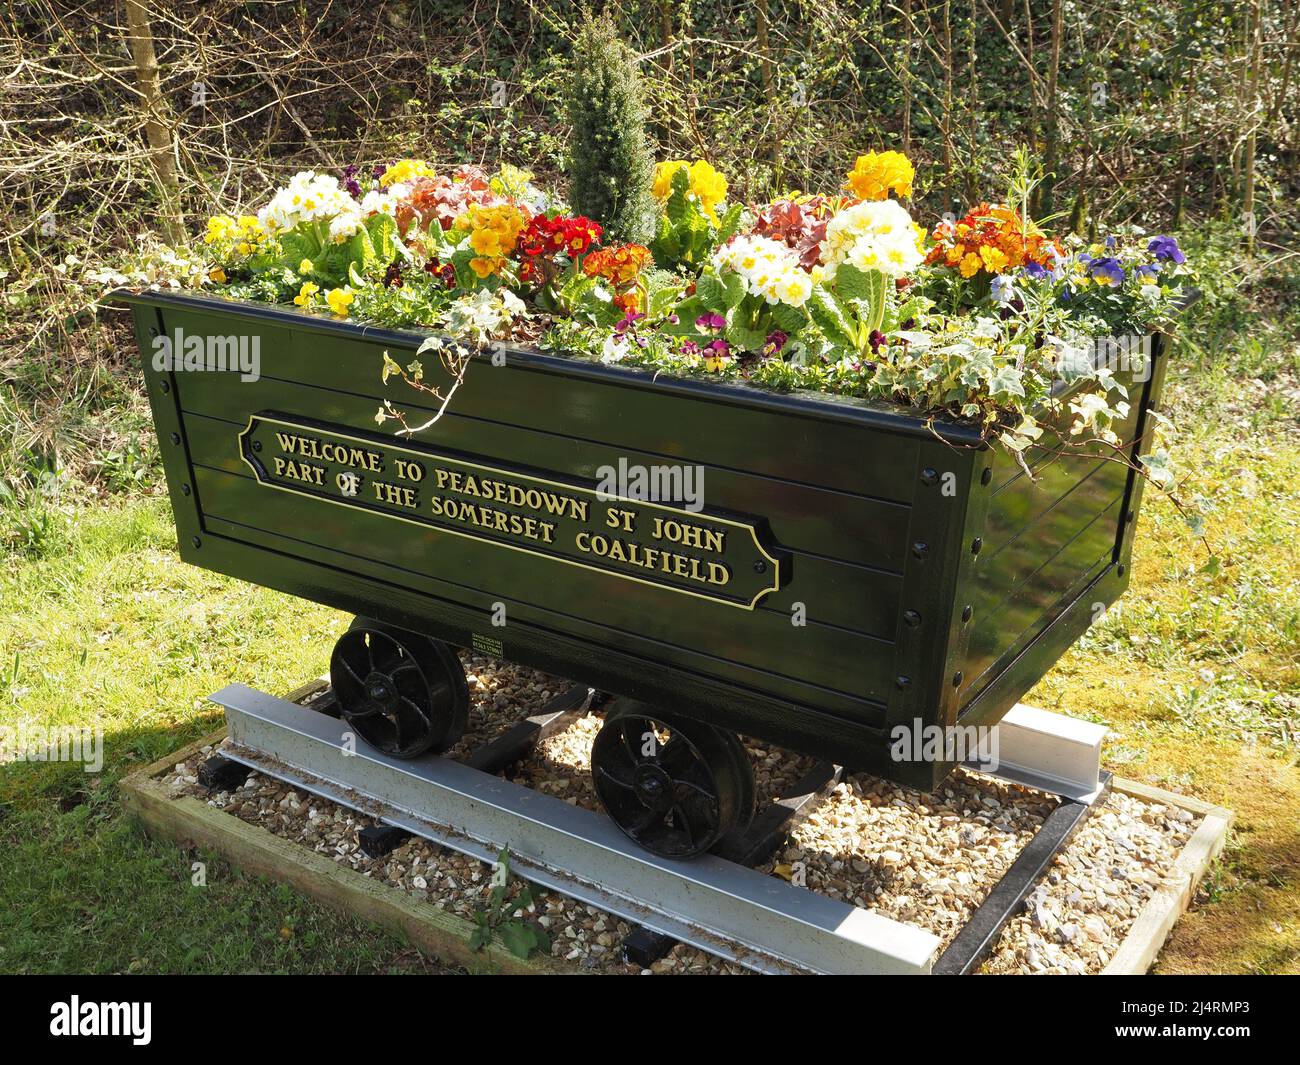 Mostra di fiori di primavera in una carrozza di tram a carbone a Peasedown St John, Somerset, Inghilterra, che celebra la storia del campo di carbone Somerset. Foto Stock